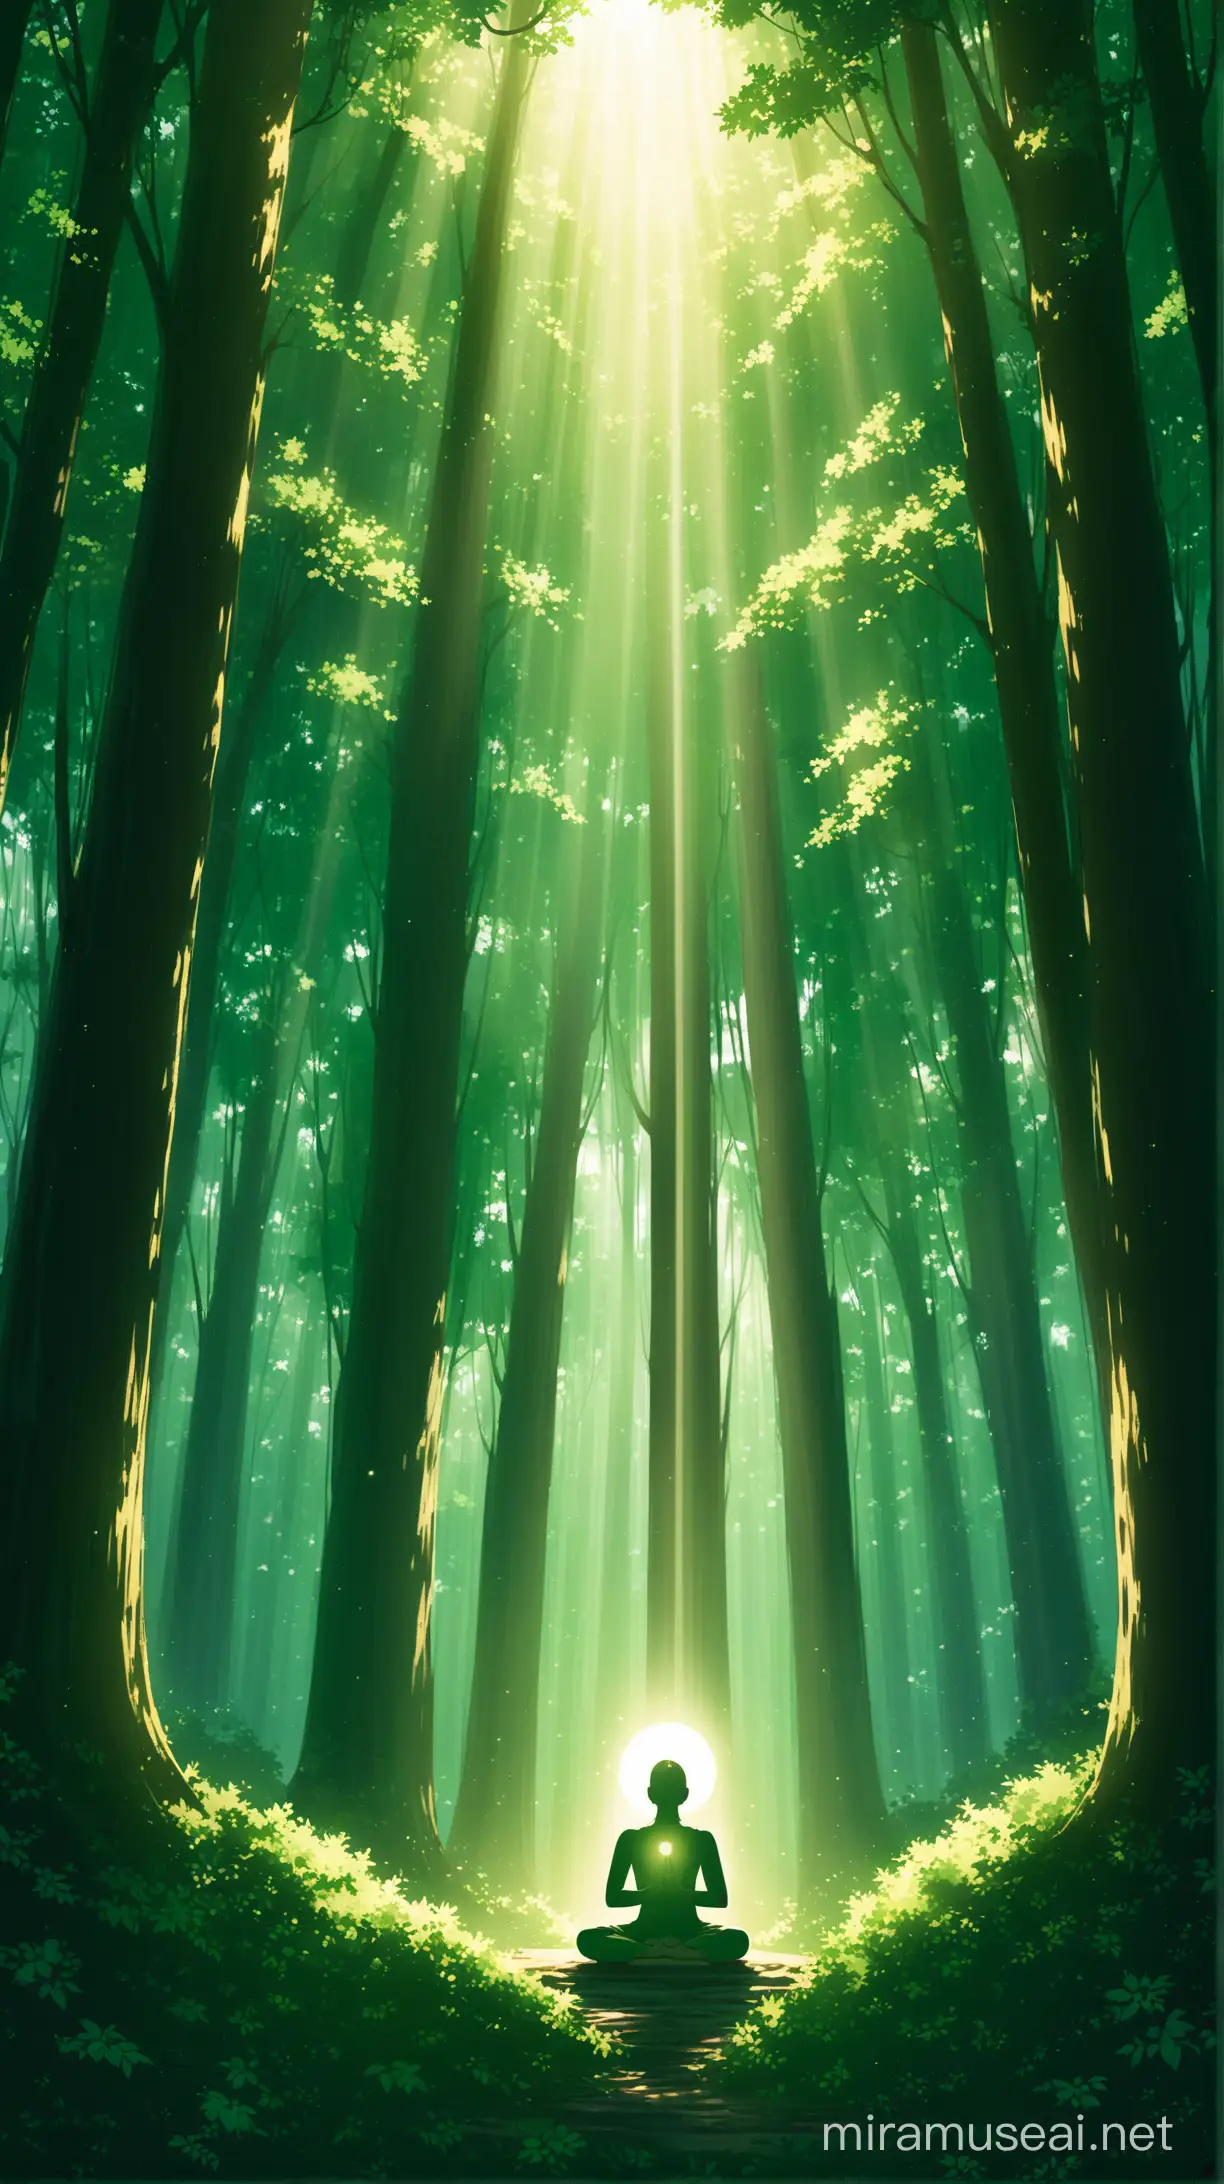 Deep Forest Meditation Solitude Amidst Verdant Canopy